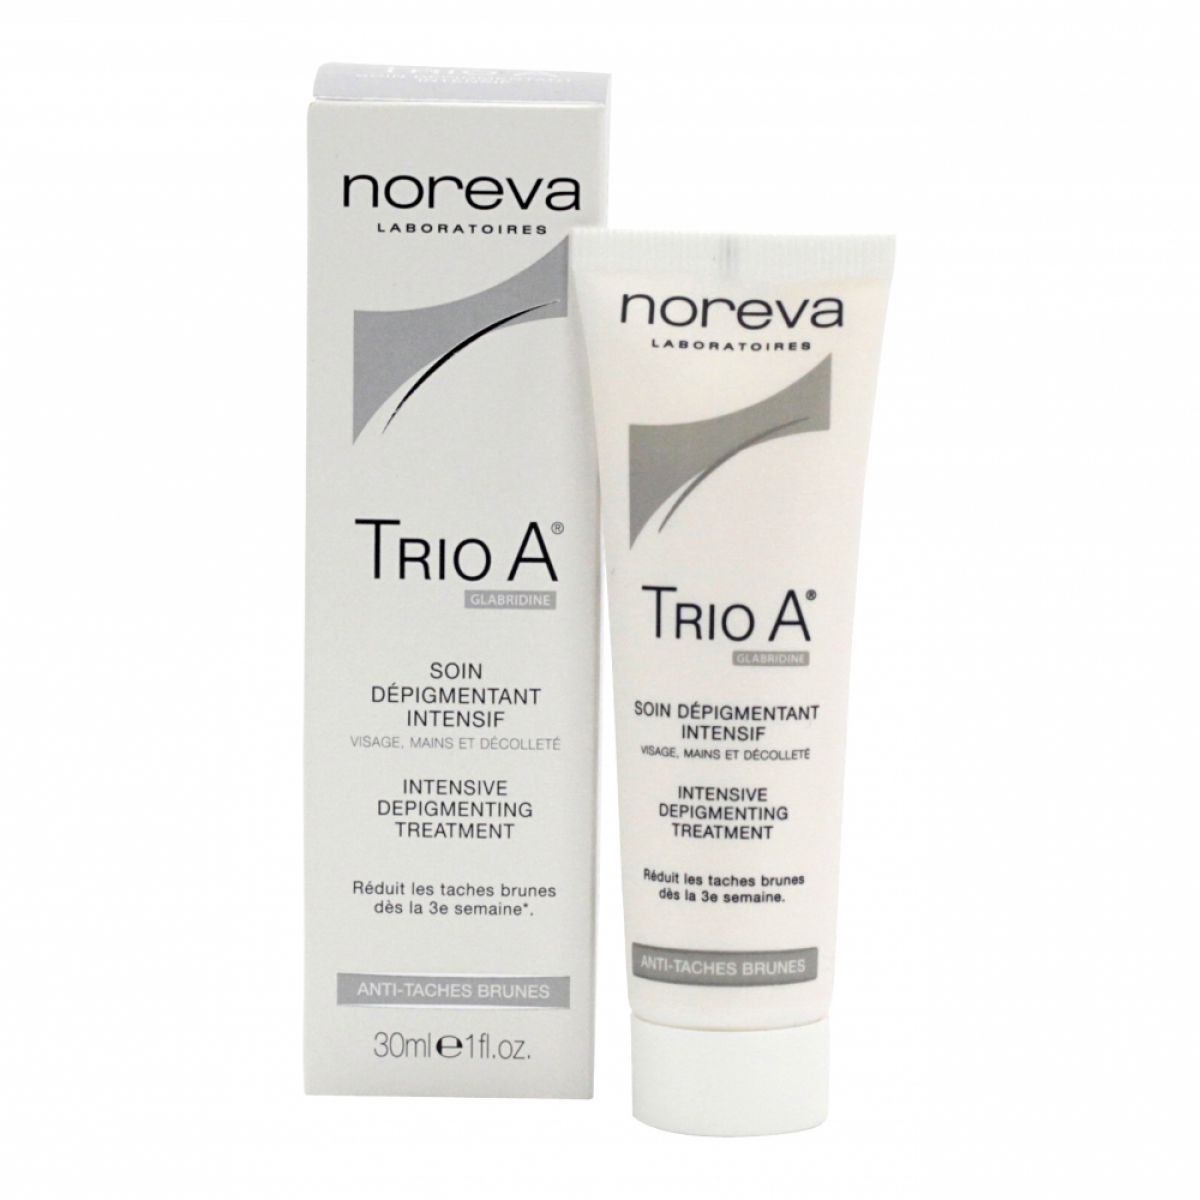 Noreva Trio A Crème Dépigmentante Intensive - 30ml Maroc